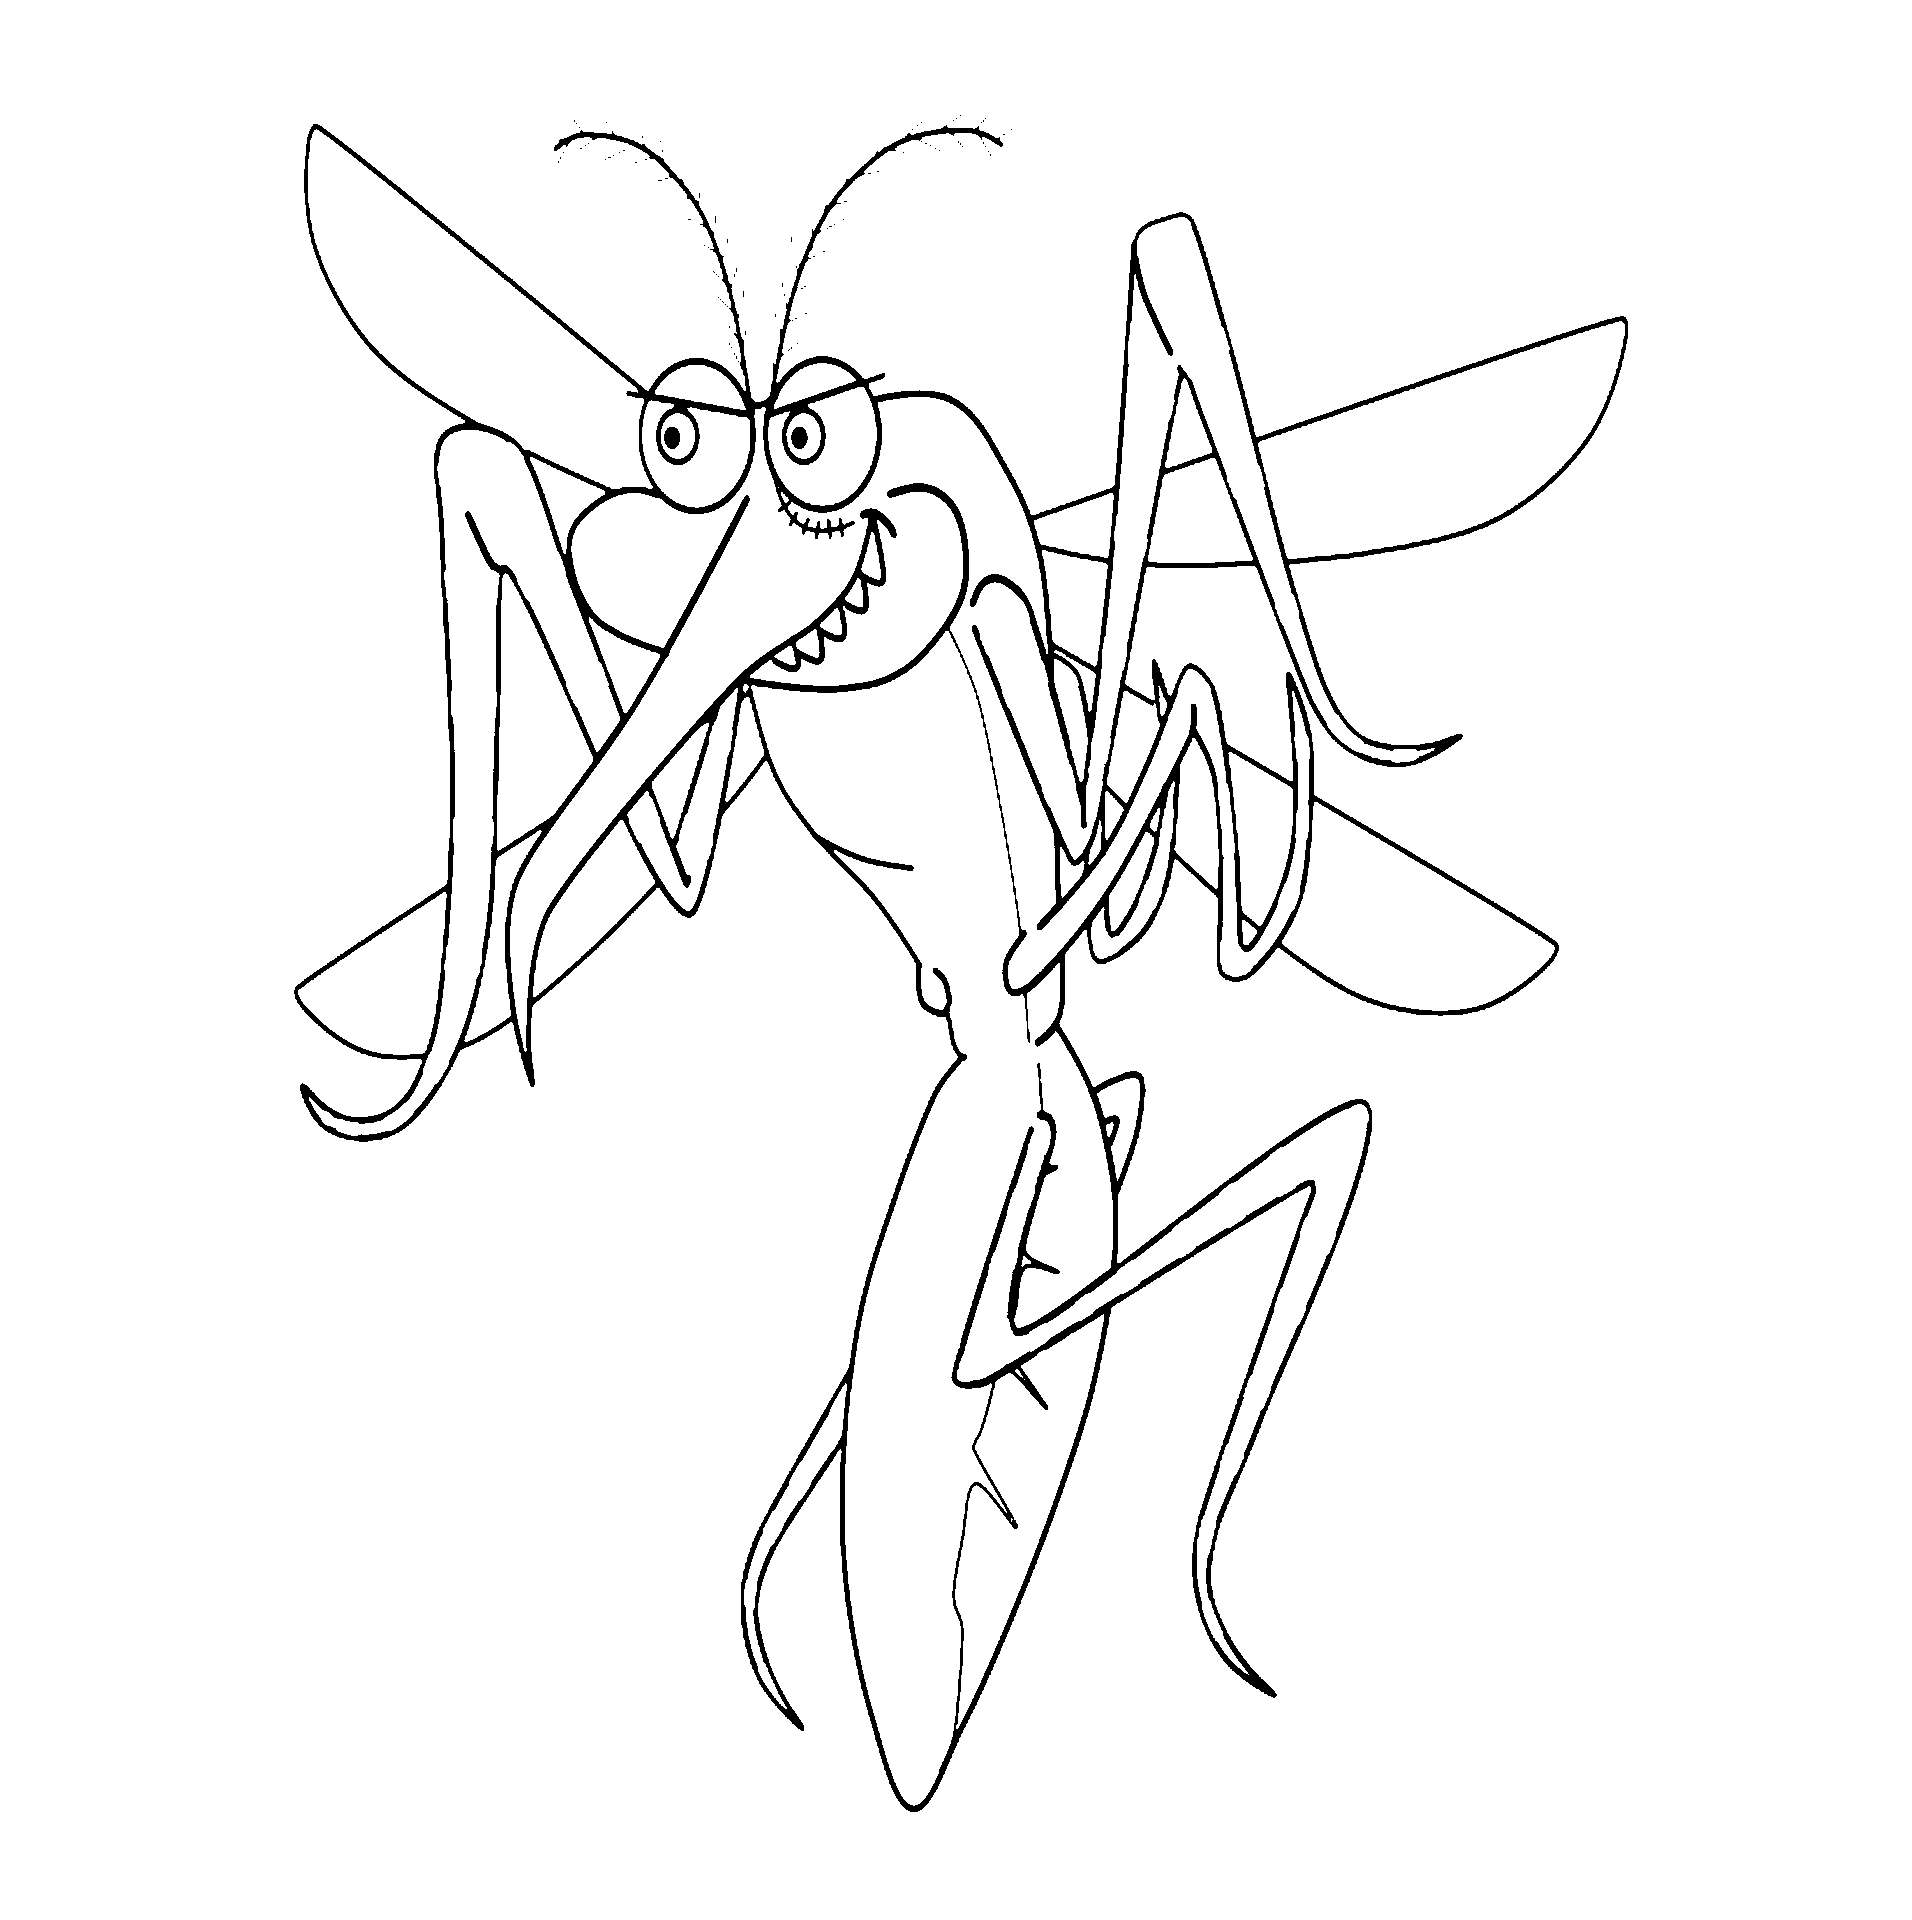 Mygga målarbok